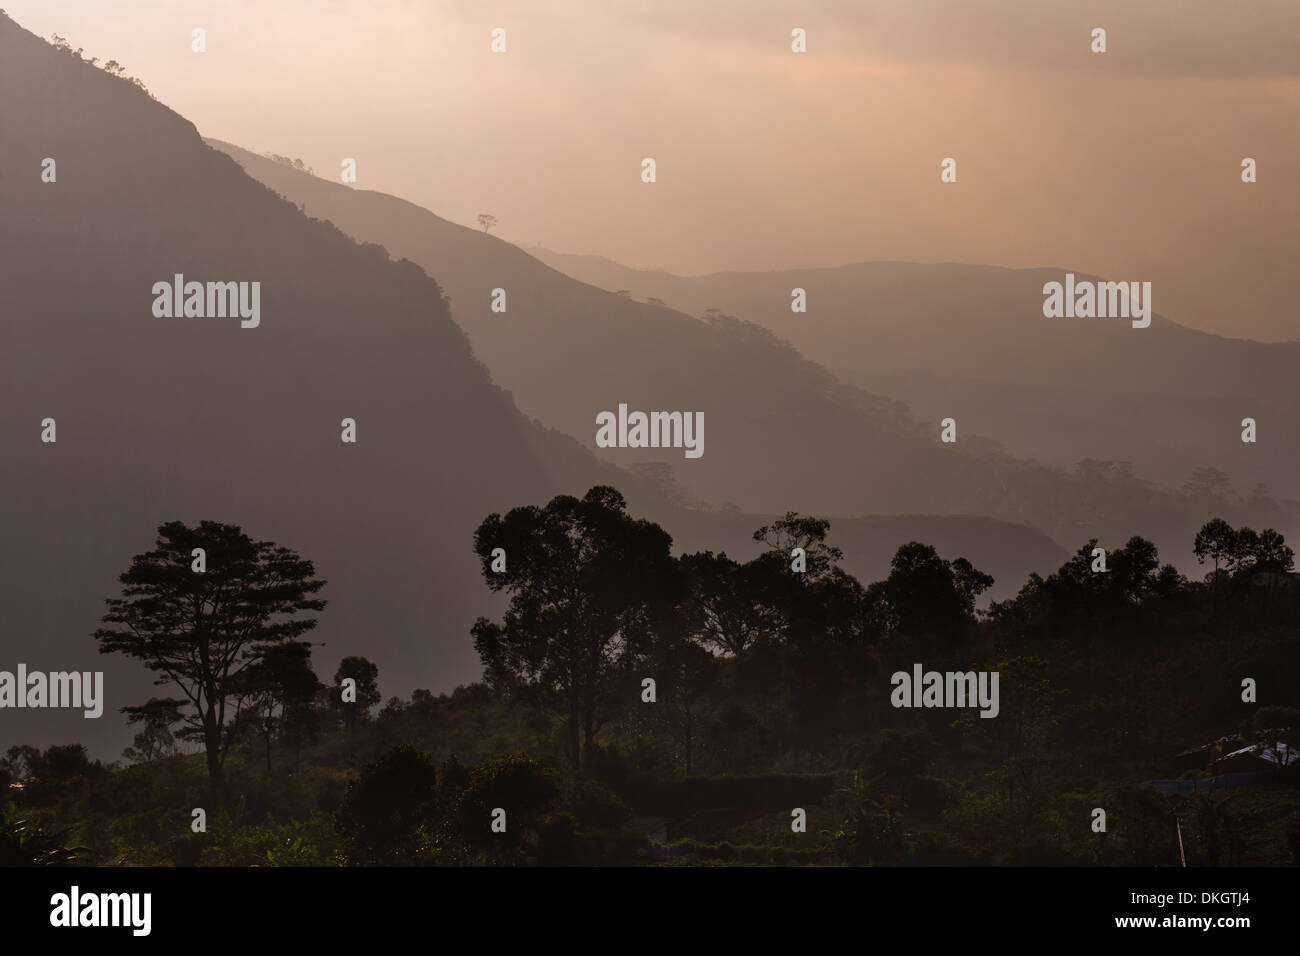 Misty Mountain Sunrise, Hügelland Haputale, Sri Lanka, Nuwara Eliya Distrikt, Sri Lanka, Asien Stockfoto